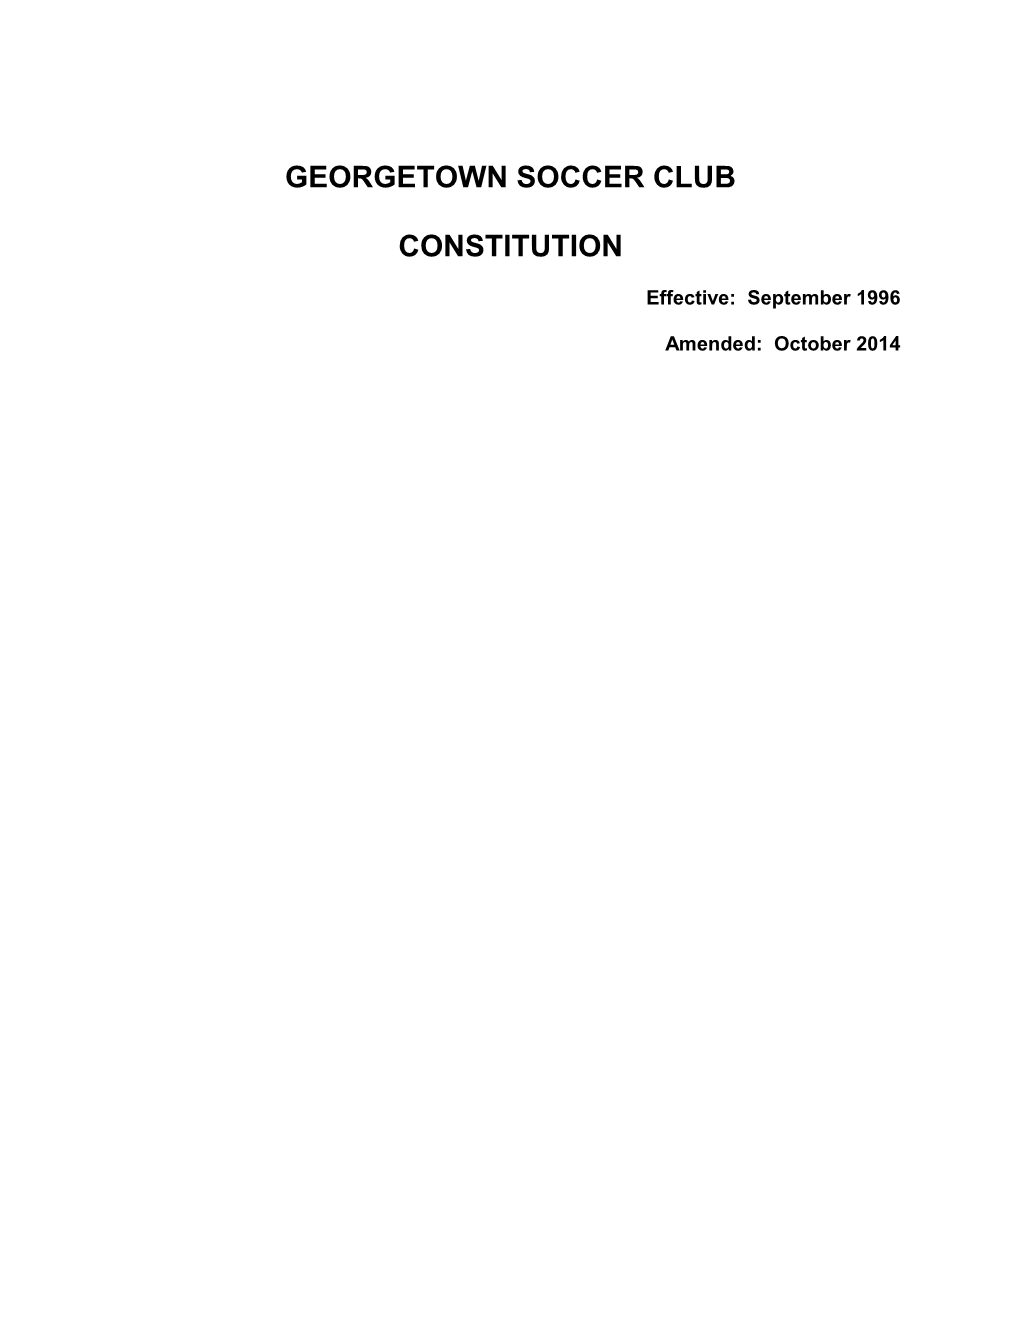 Georgetown Soccer Club